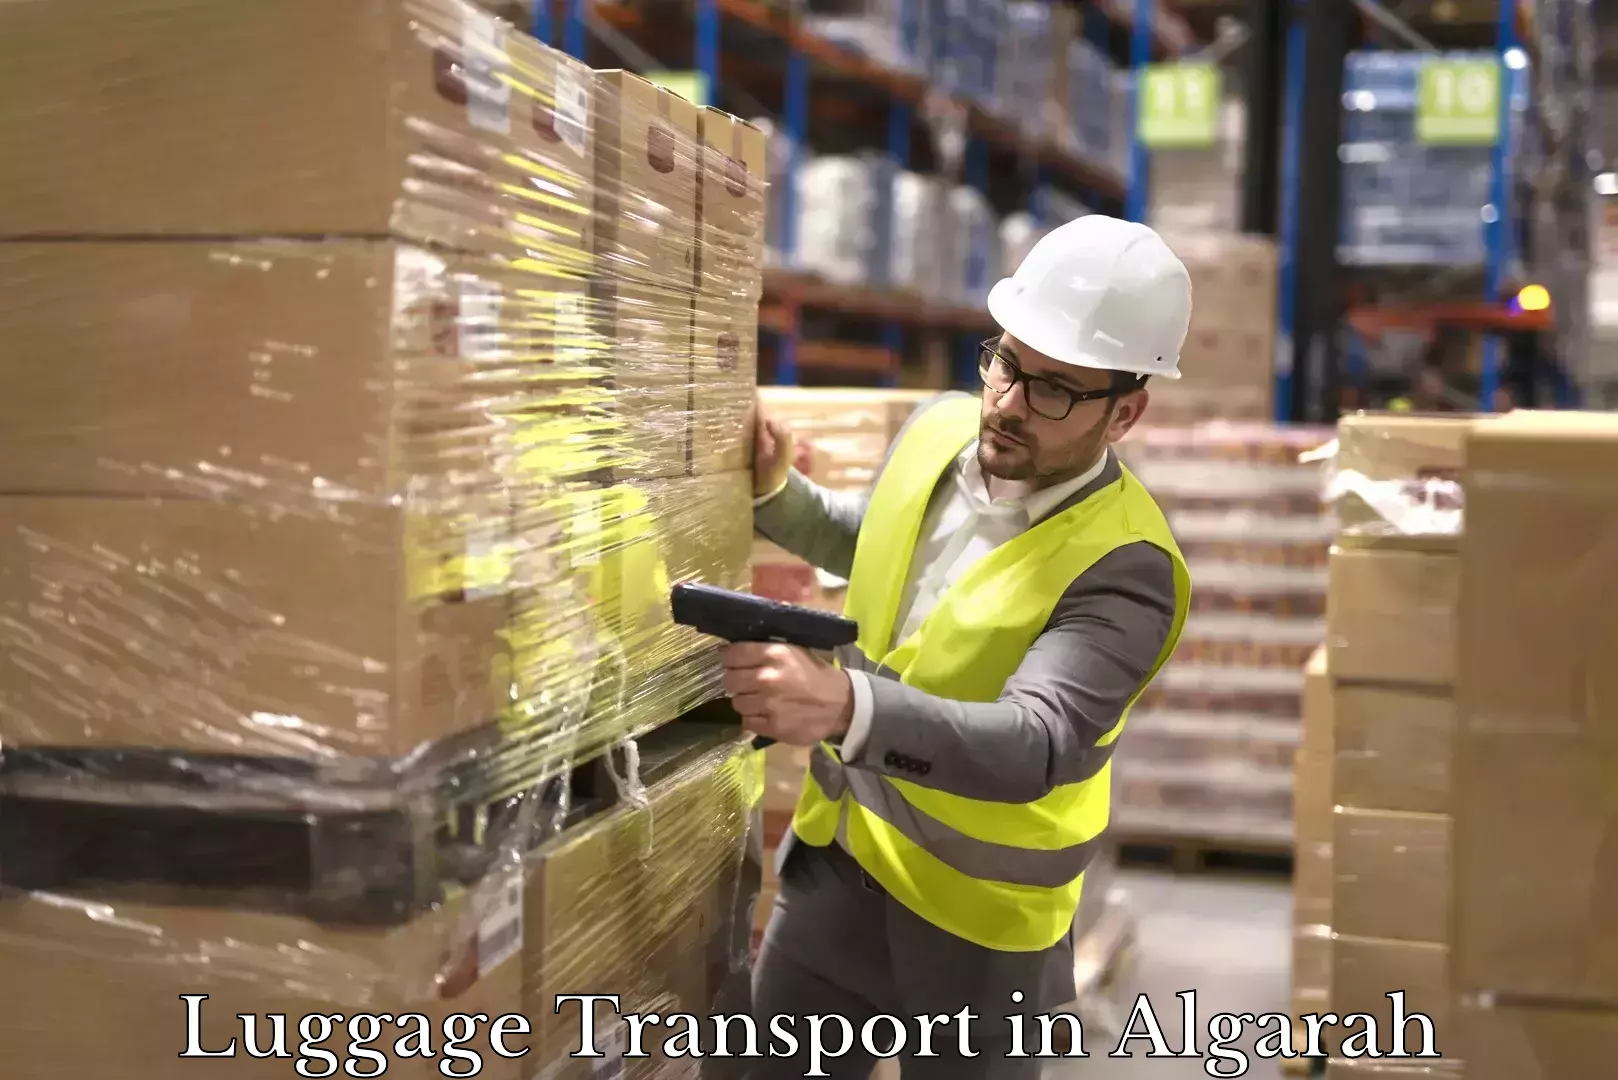 High-quality baggage shipment in Algarah